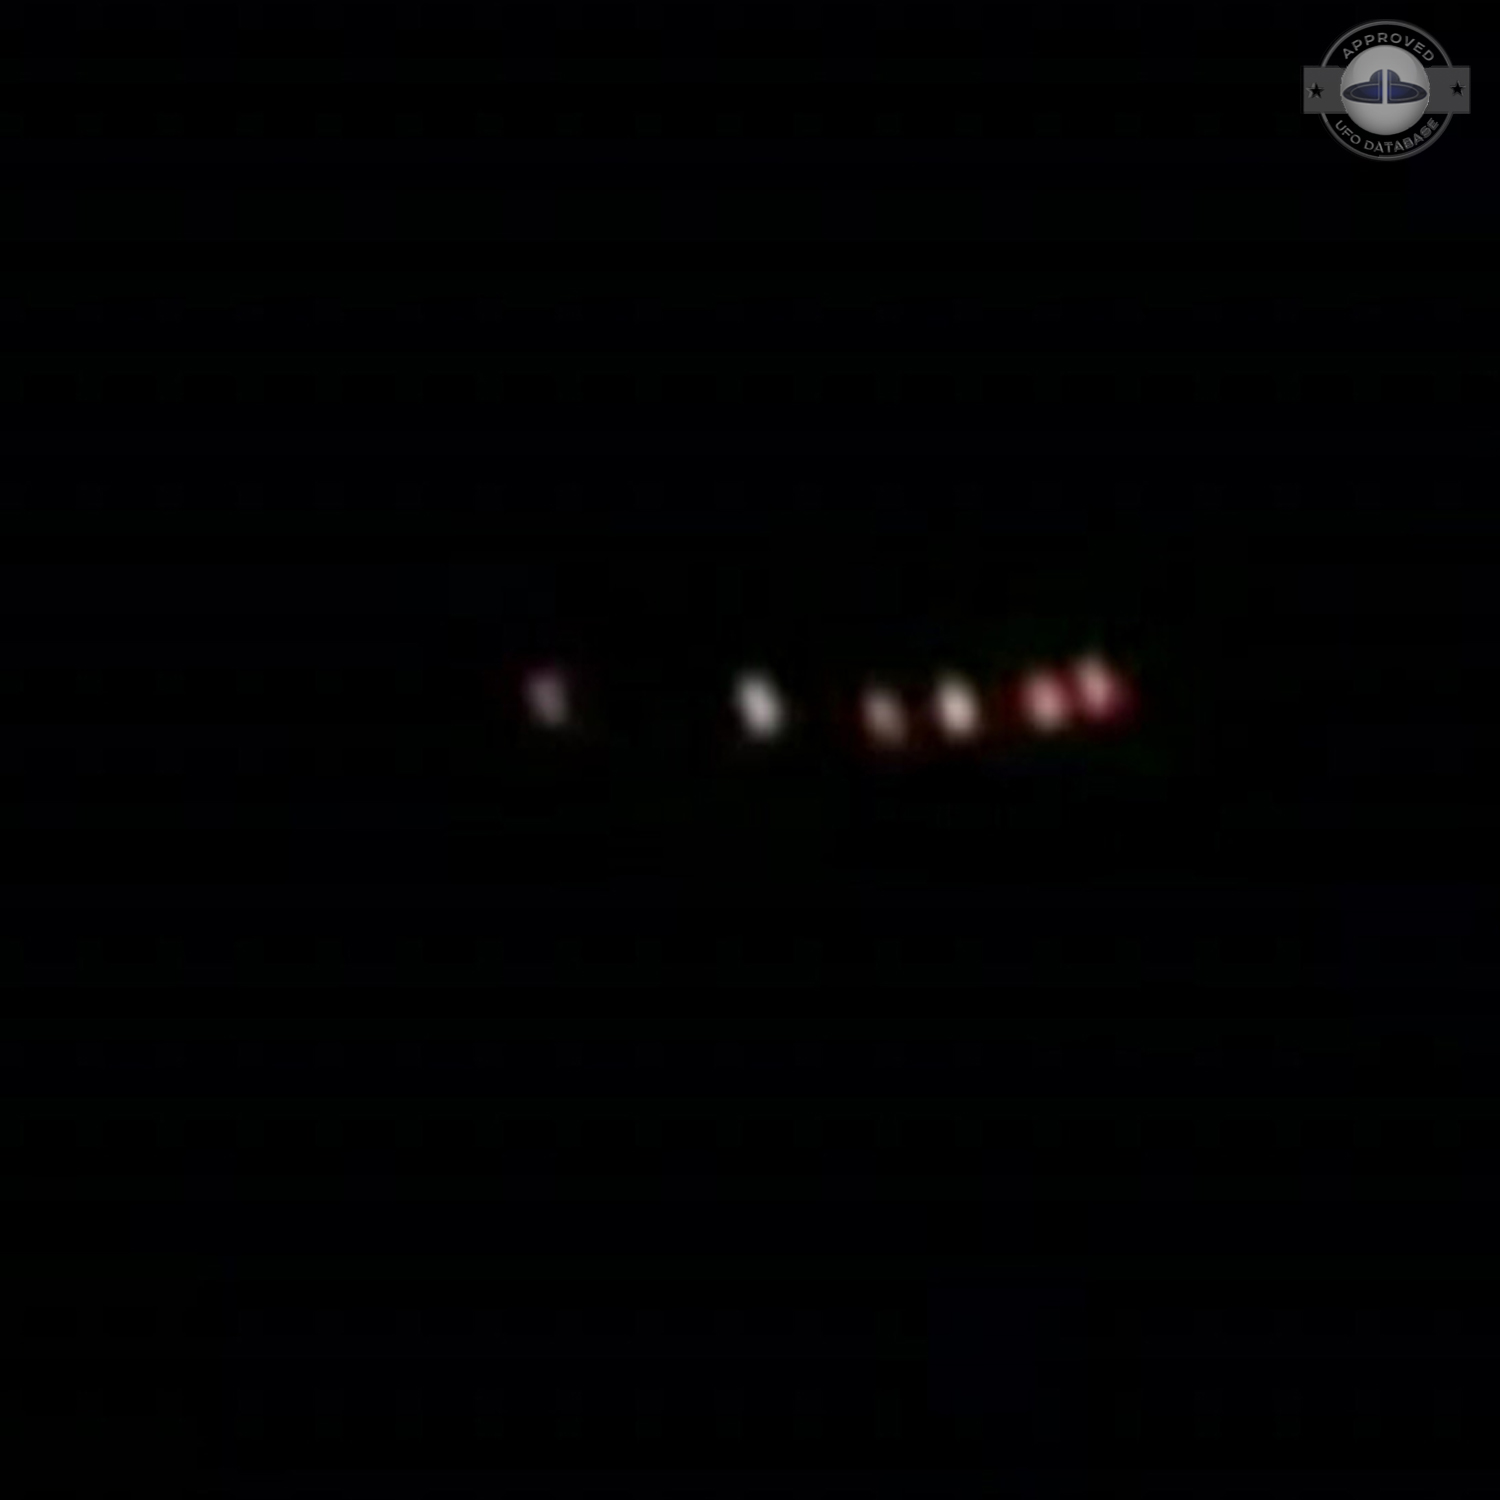 V Shape UFO made of six orange lights seen in North Carolina - 2012 UFO Picture #499-2